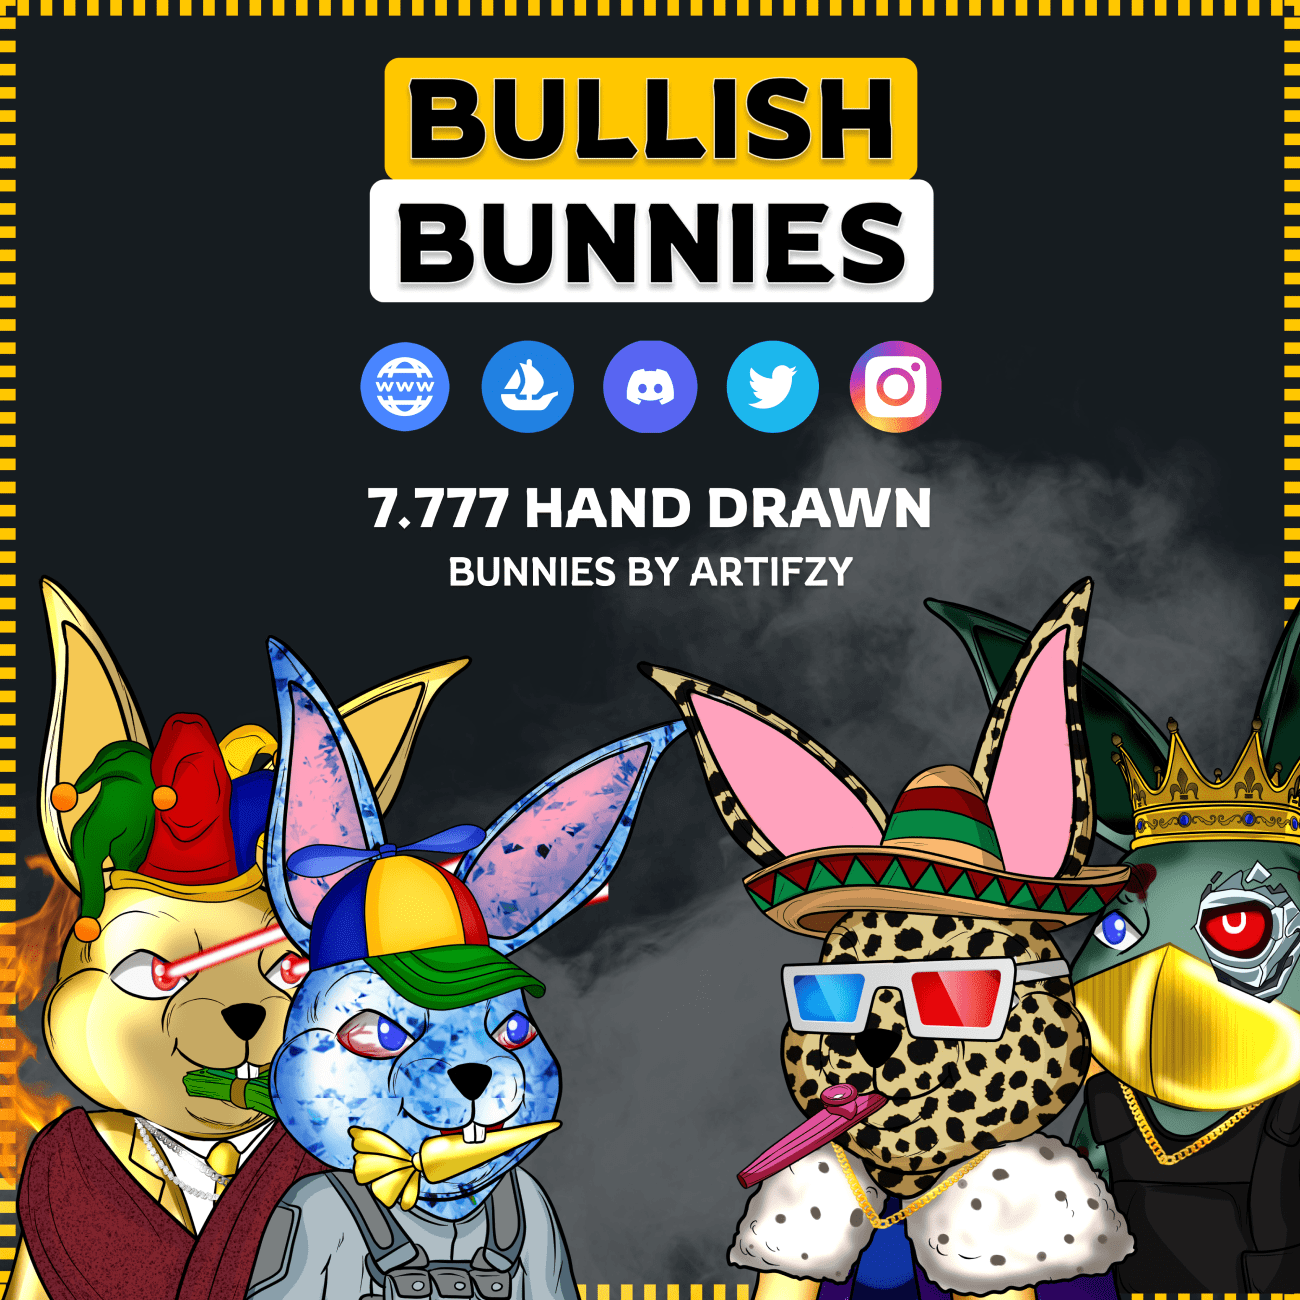 Bullish Bunnies & Metaverse $BULLISH P2E game